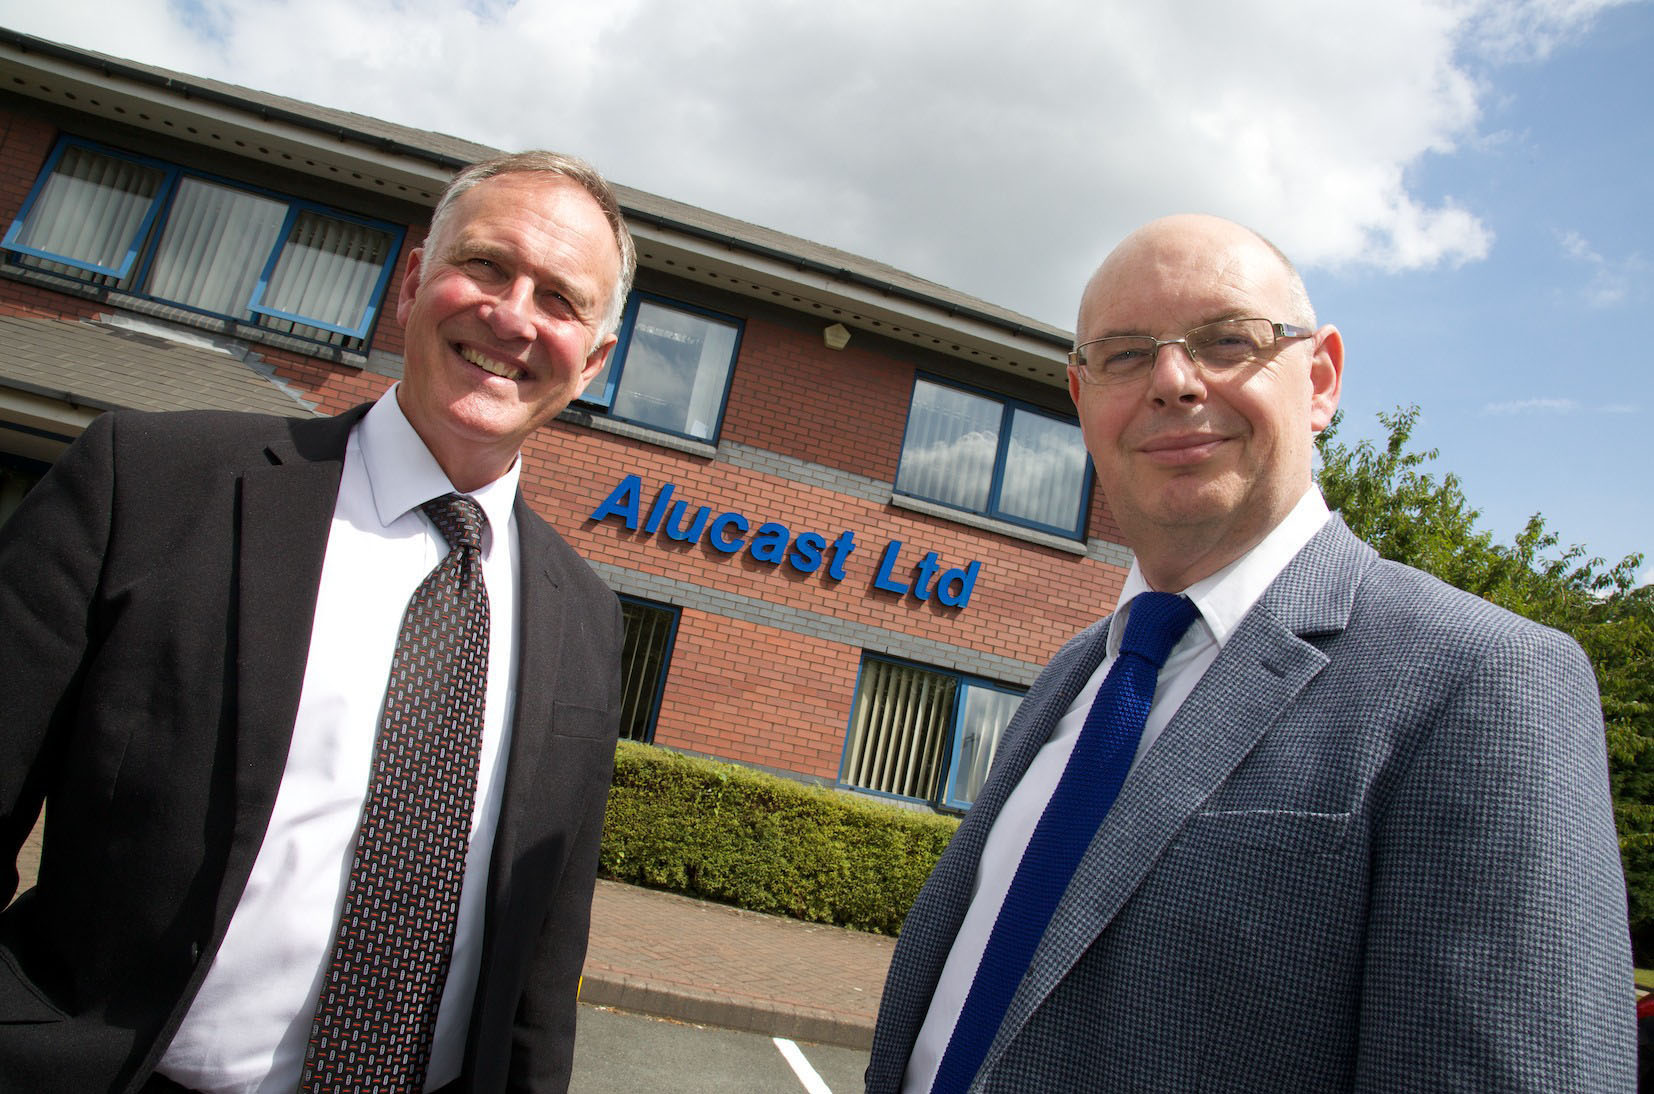 Servitization push set to deliver £800,000 sales boost for Alucast